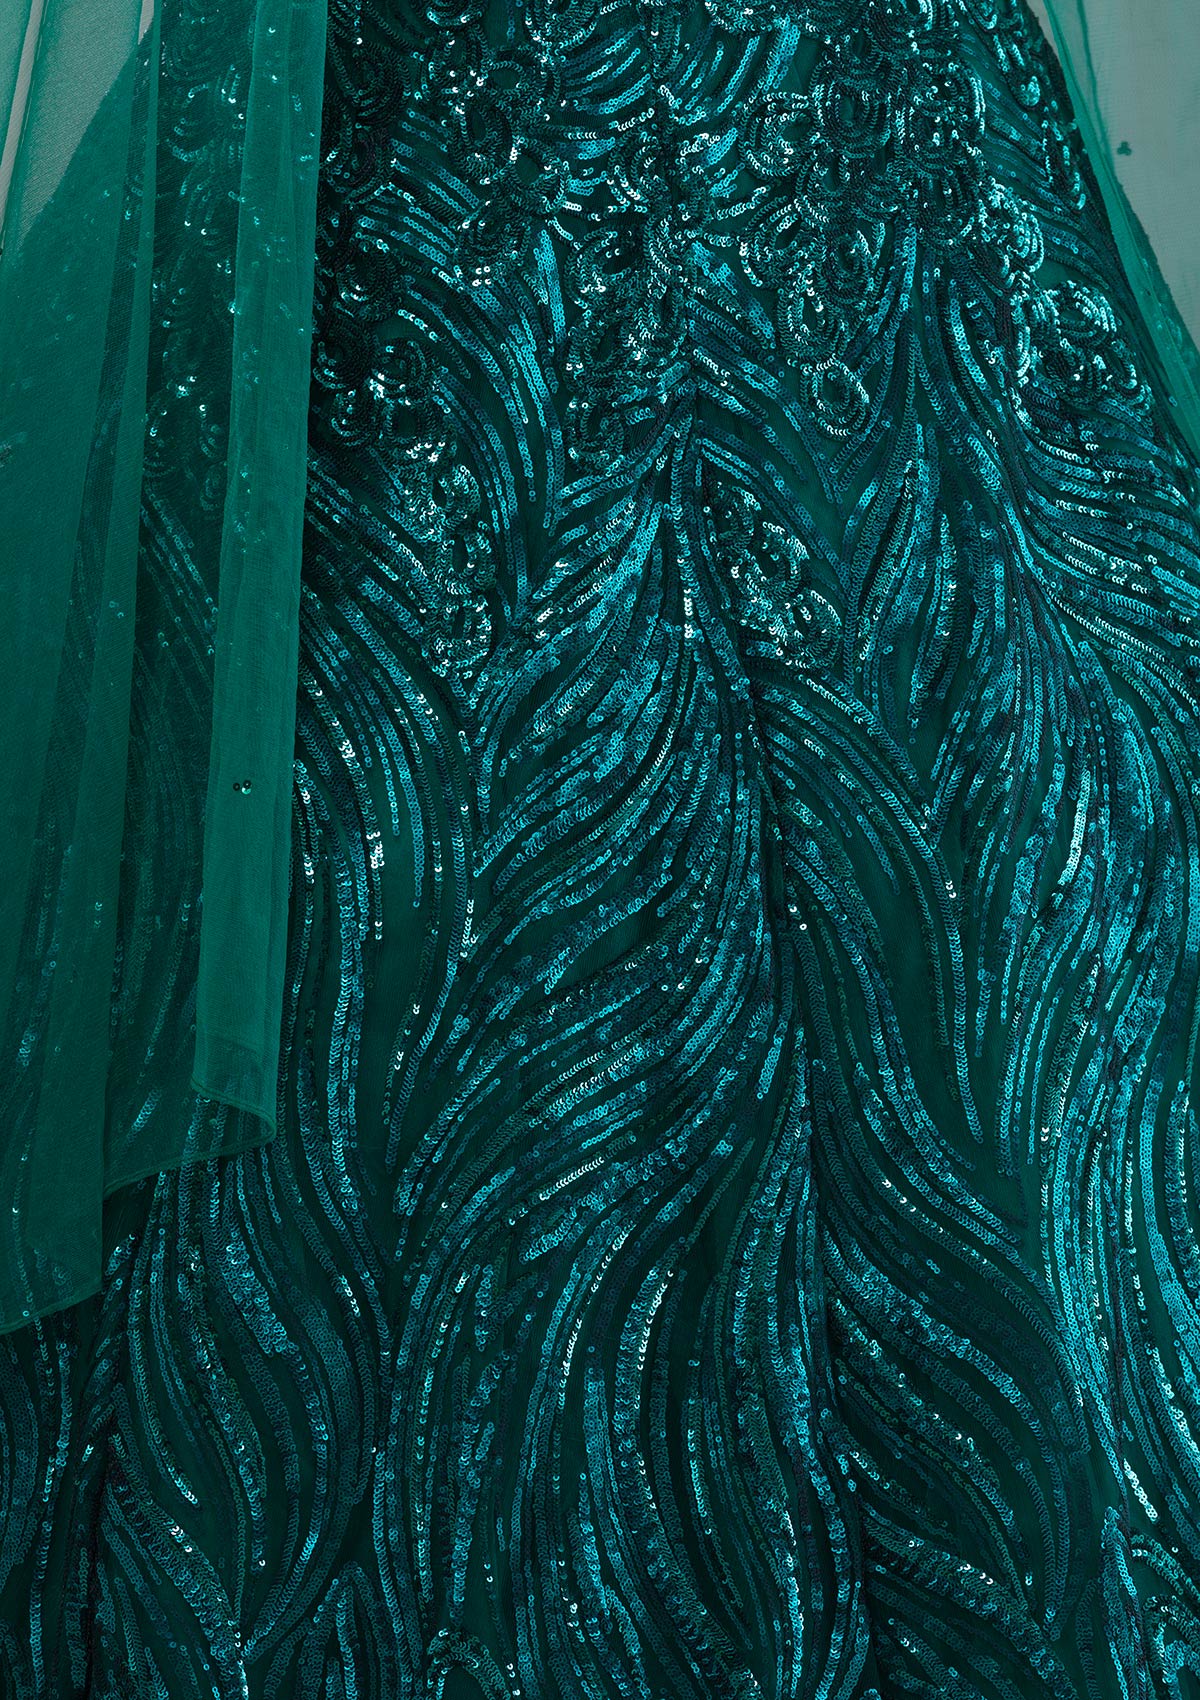 Bottle Green Sequins Net Designer Gown-Koskii